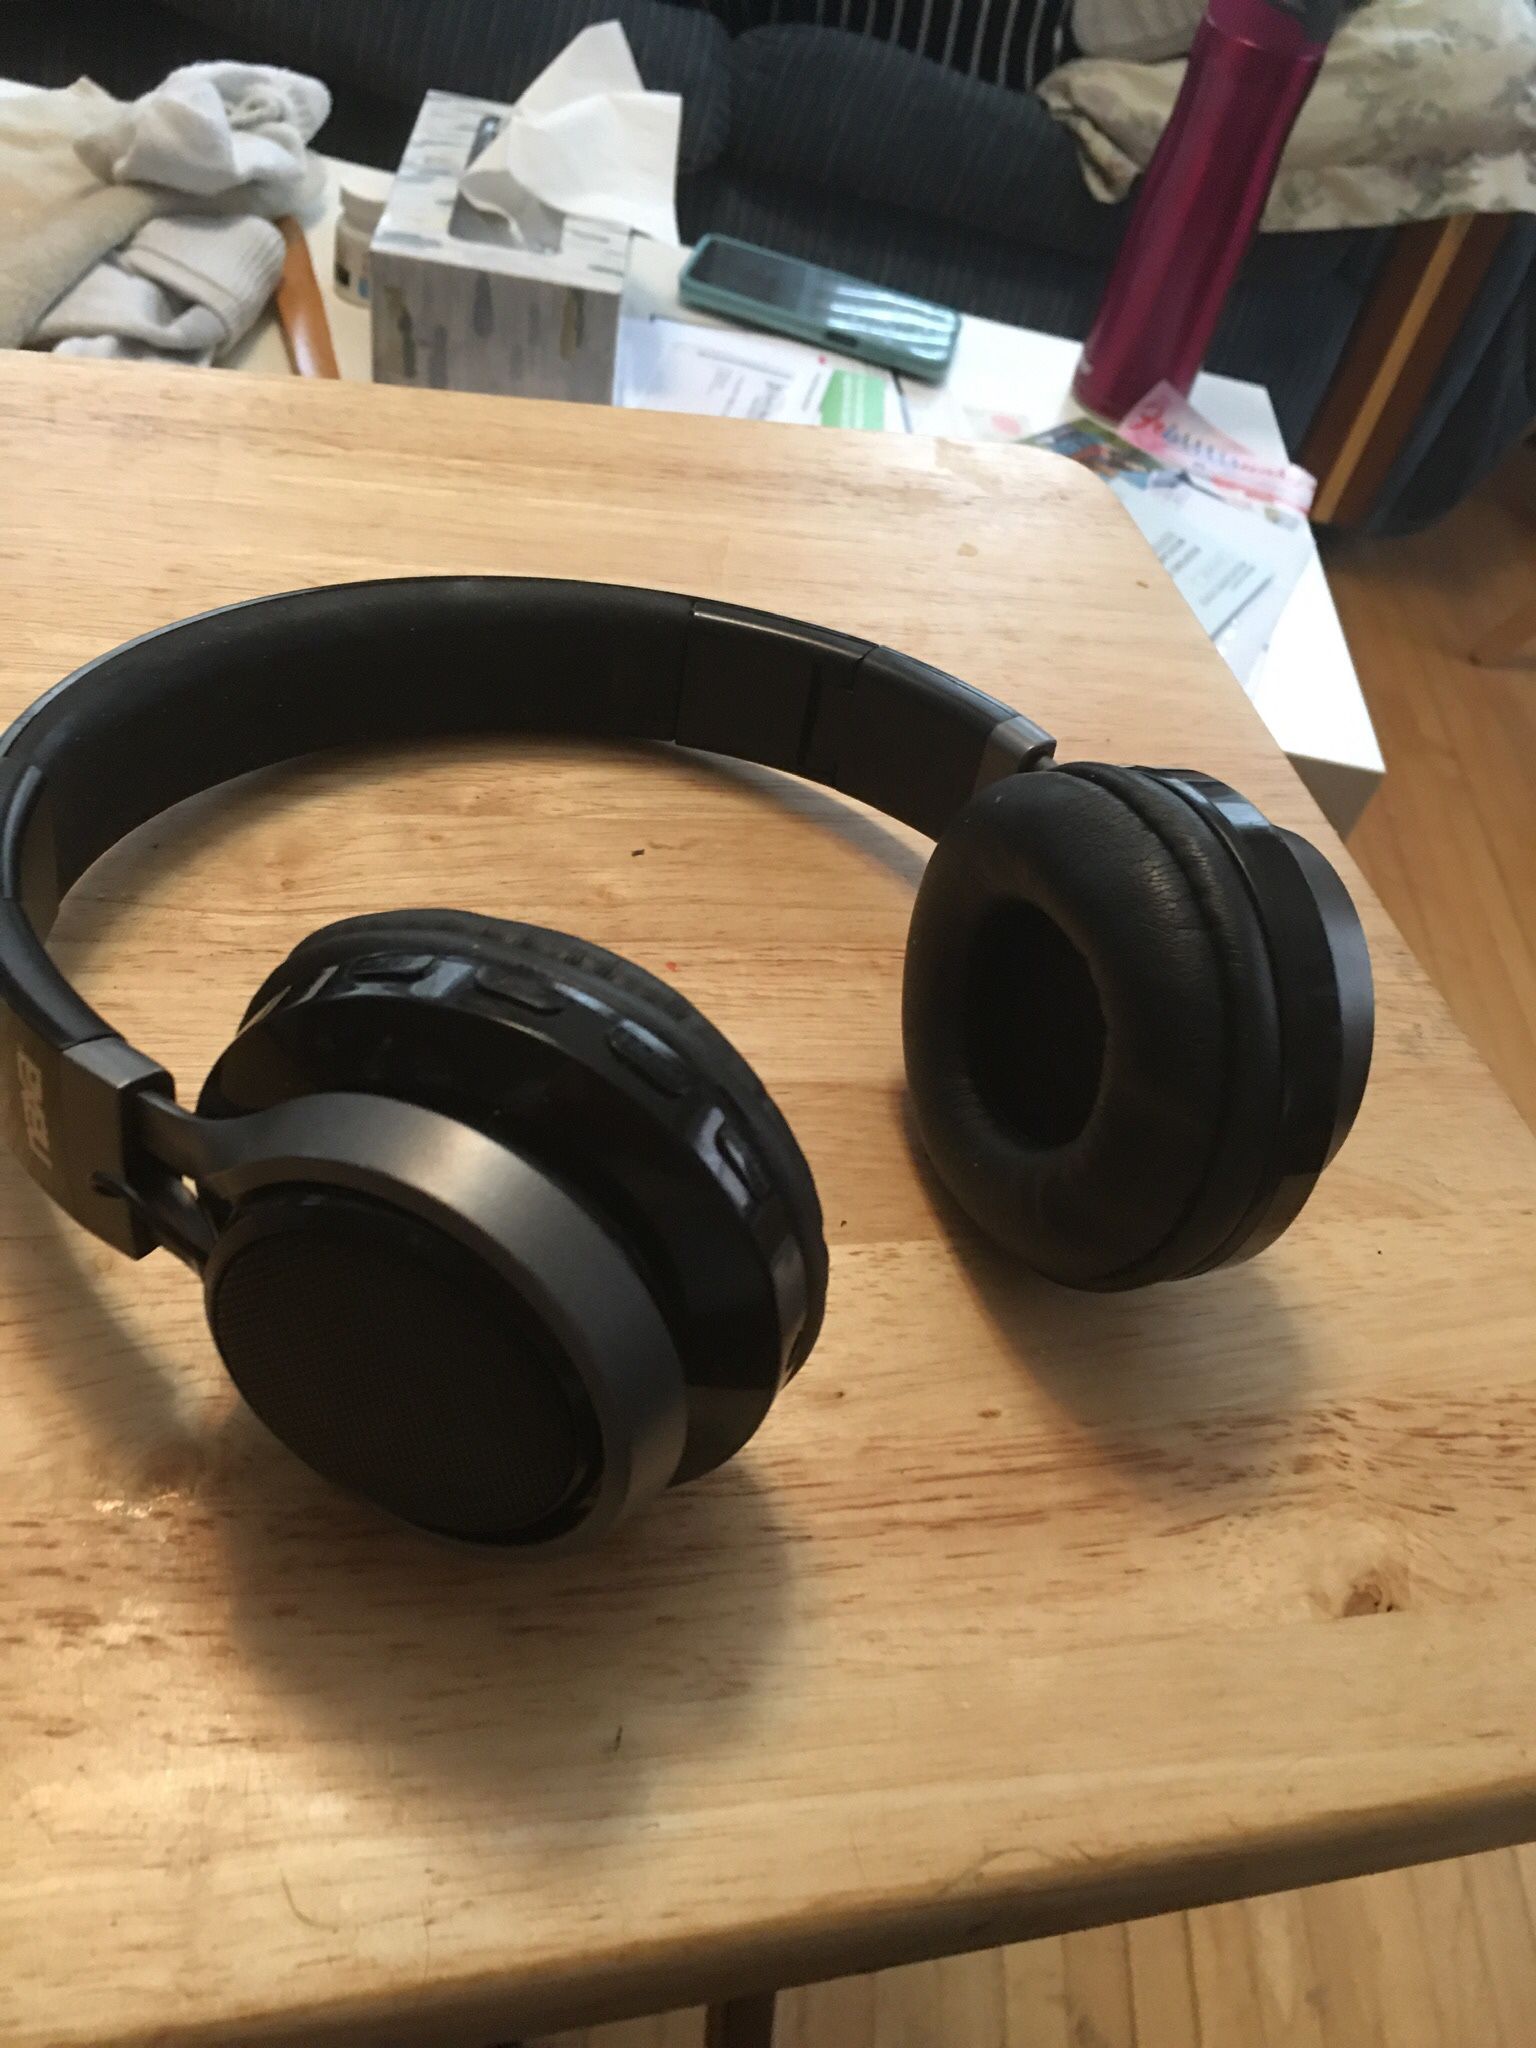 pair of black bluetooth headphones